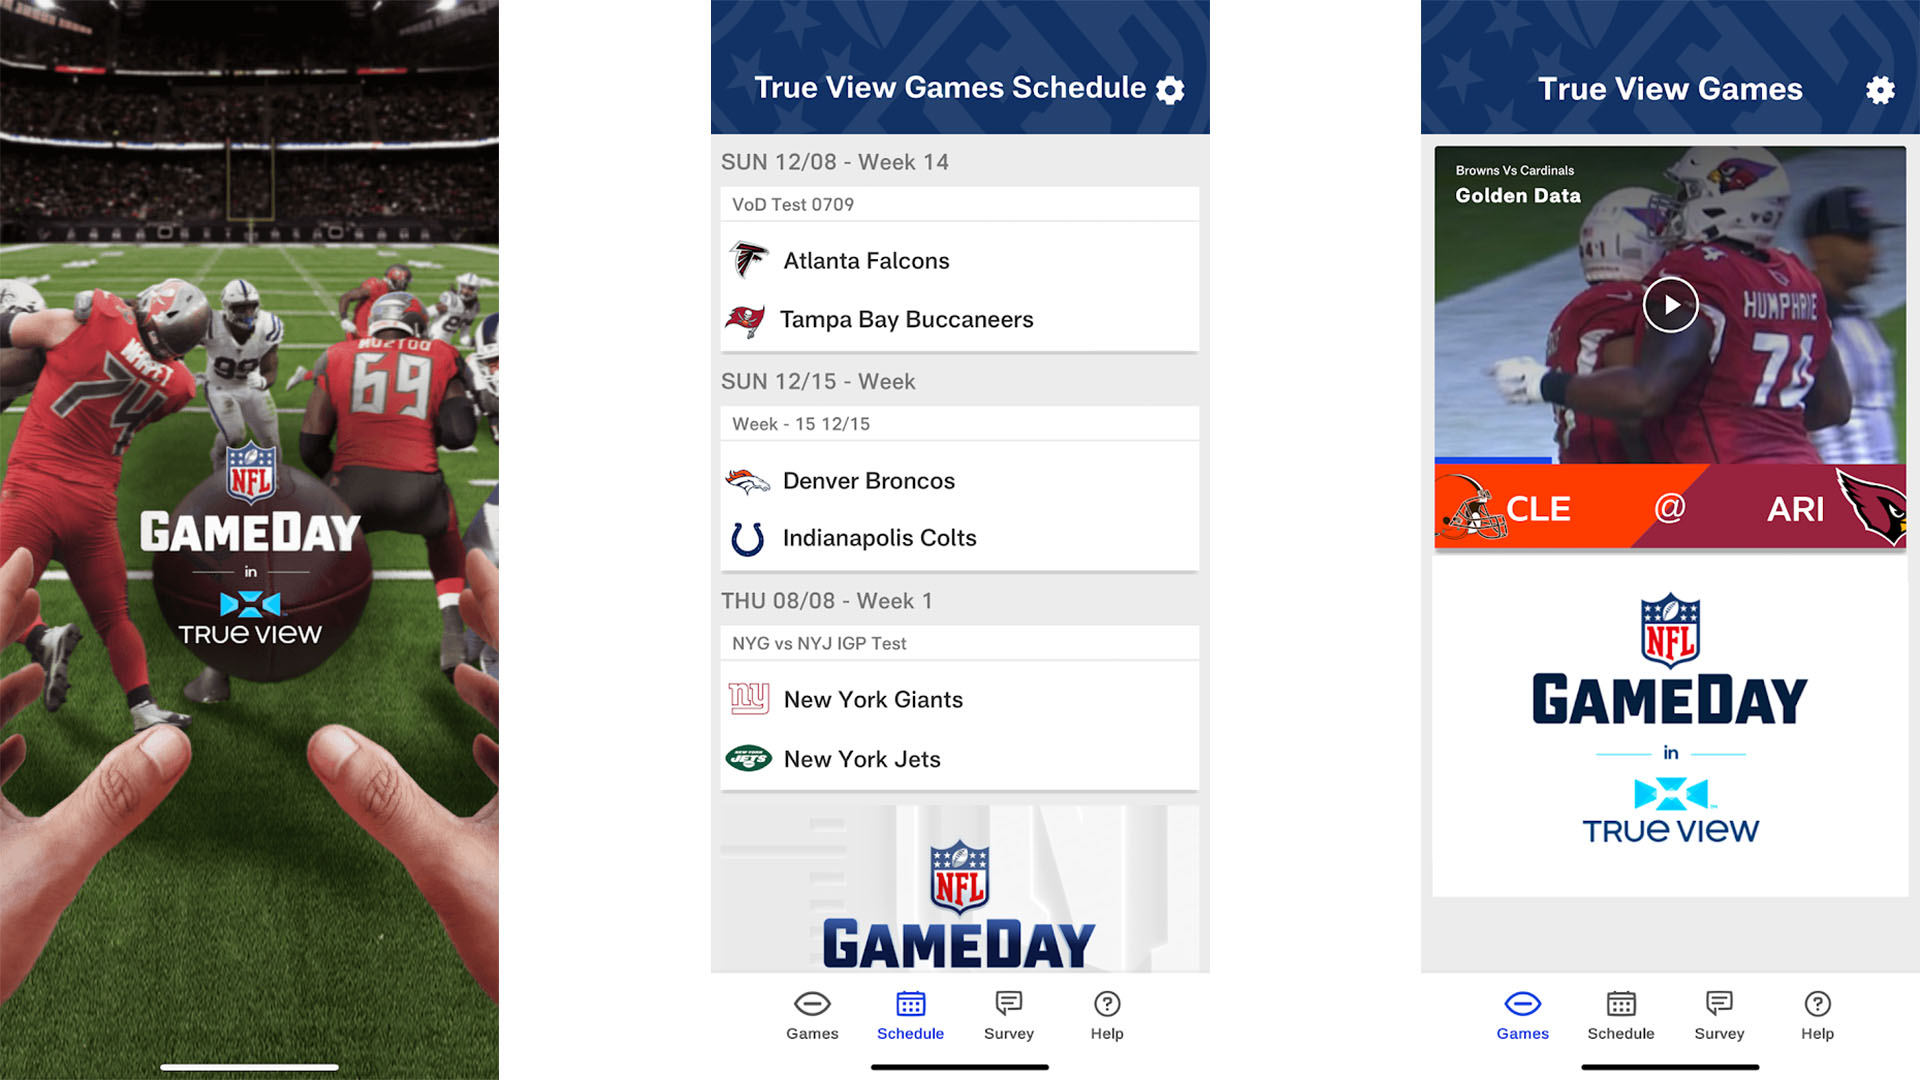 NFL Game Day in True View screenshot